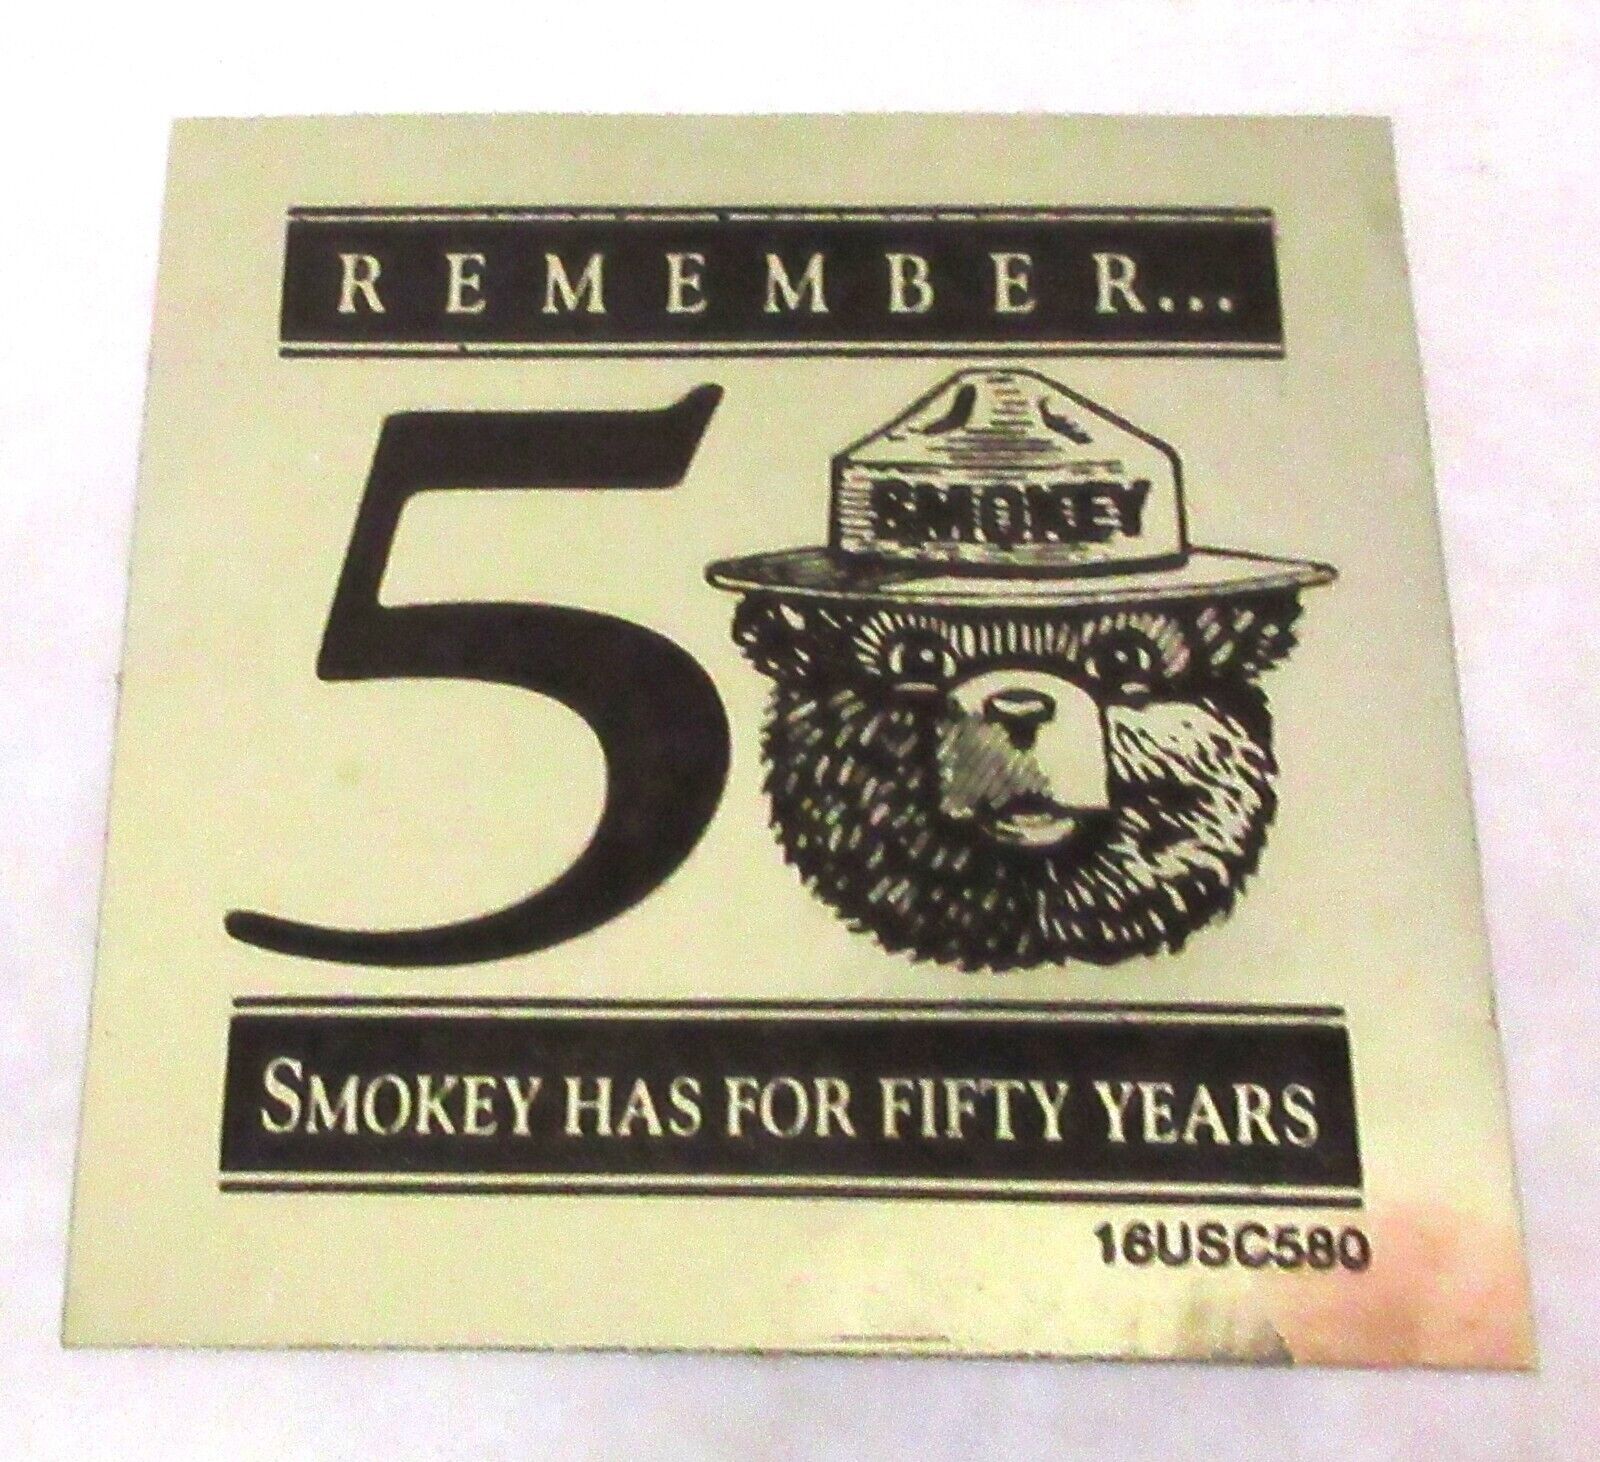 Original Issue Smokey the Bear Sticker - Remember Smokey has for 50 Years